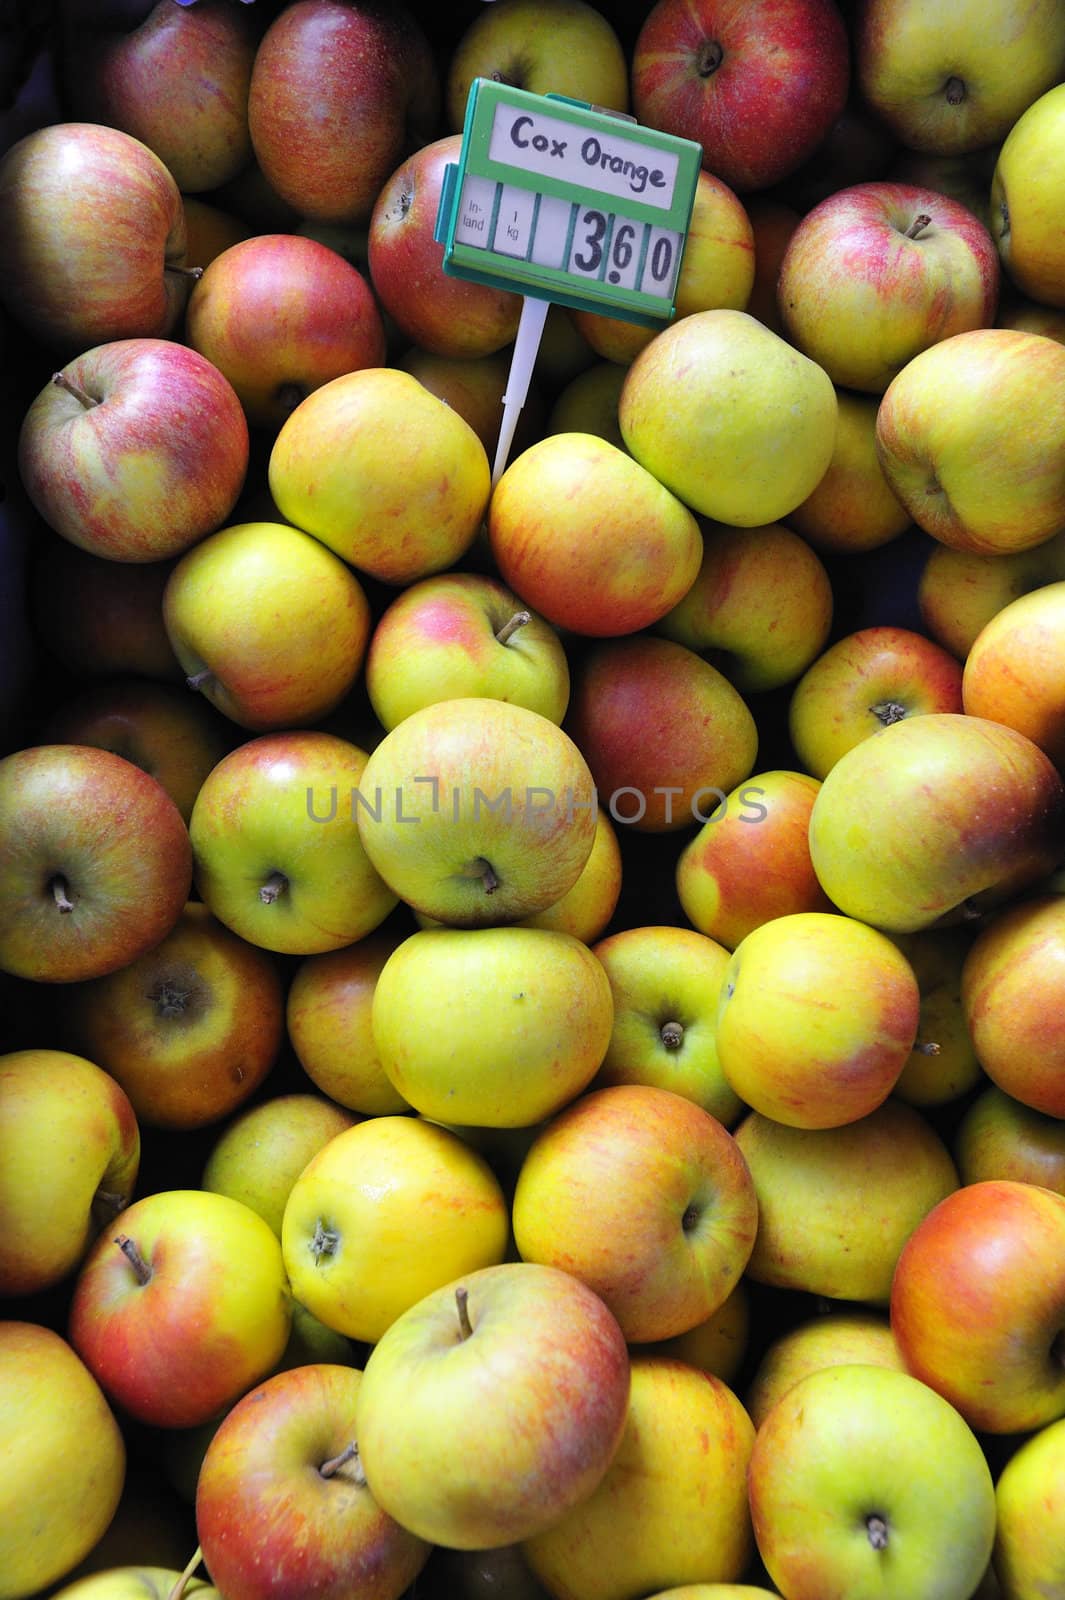 Apples for sale by Bateleur